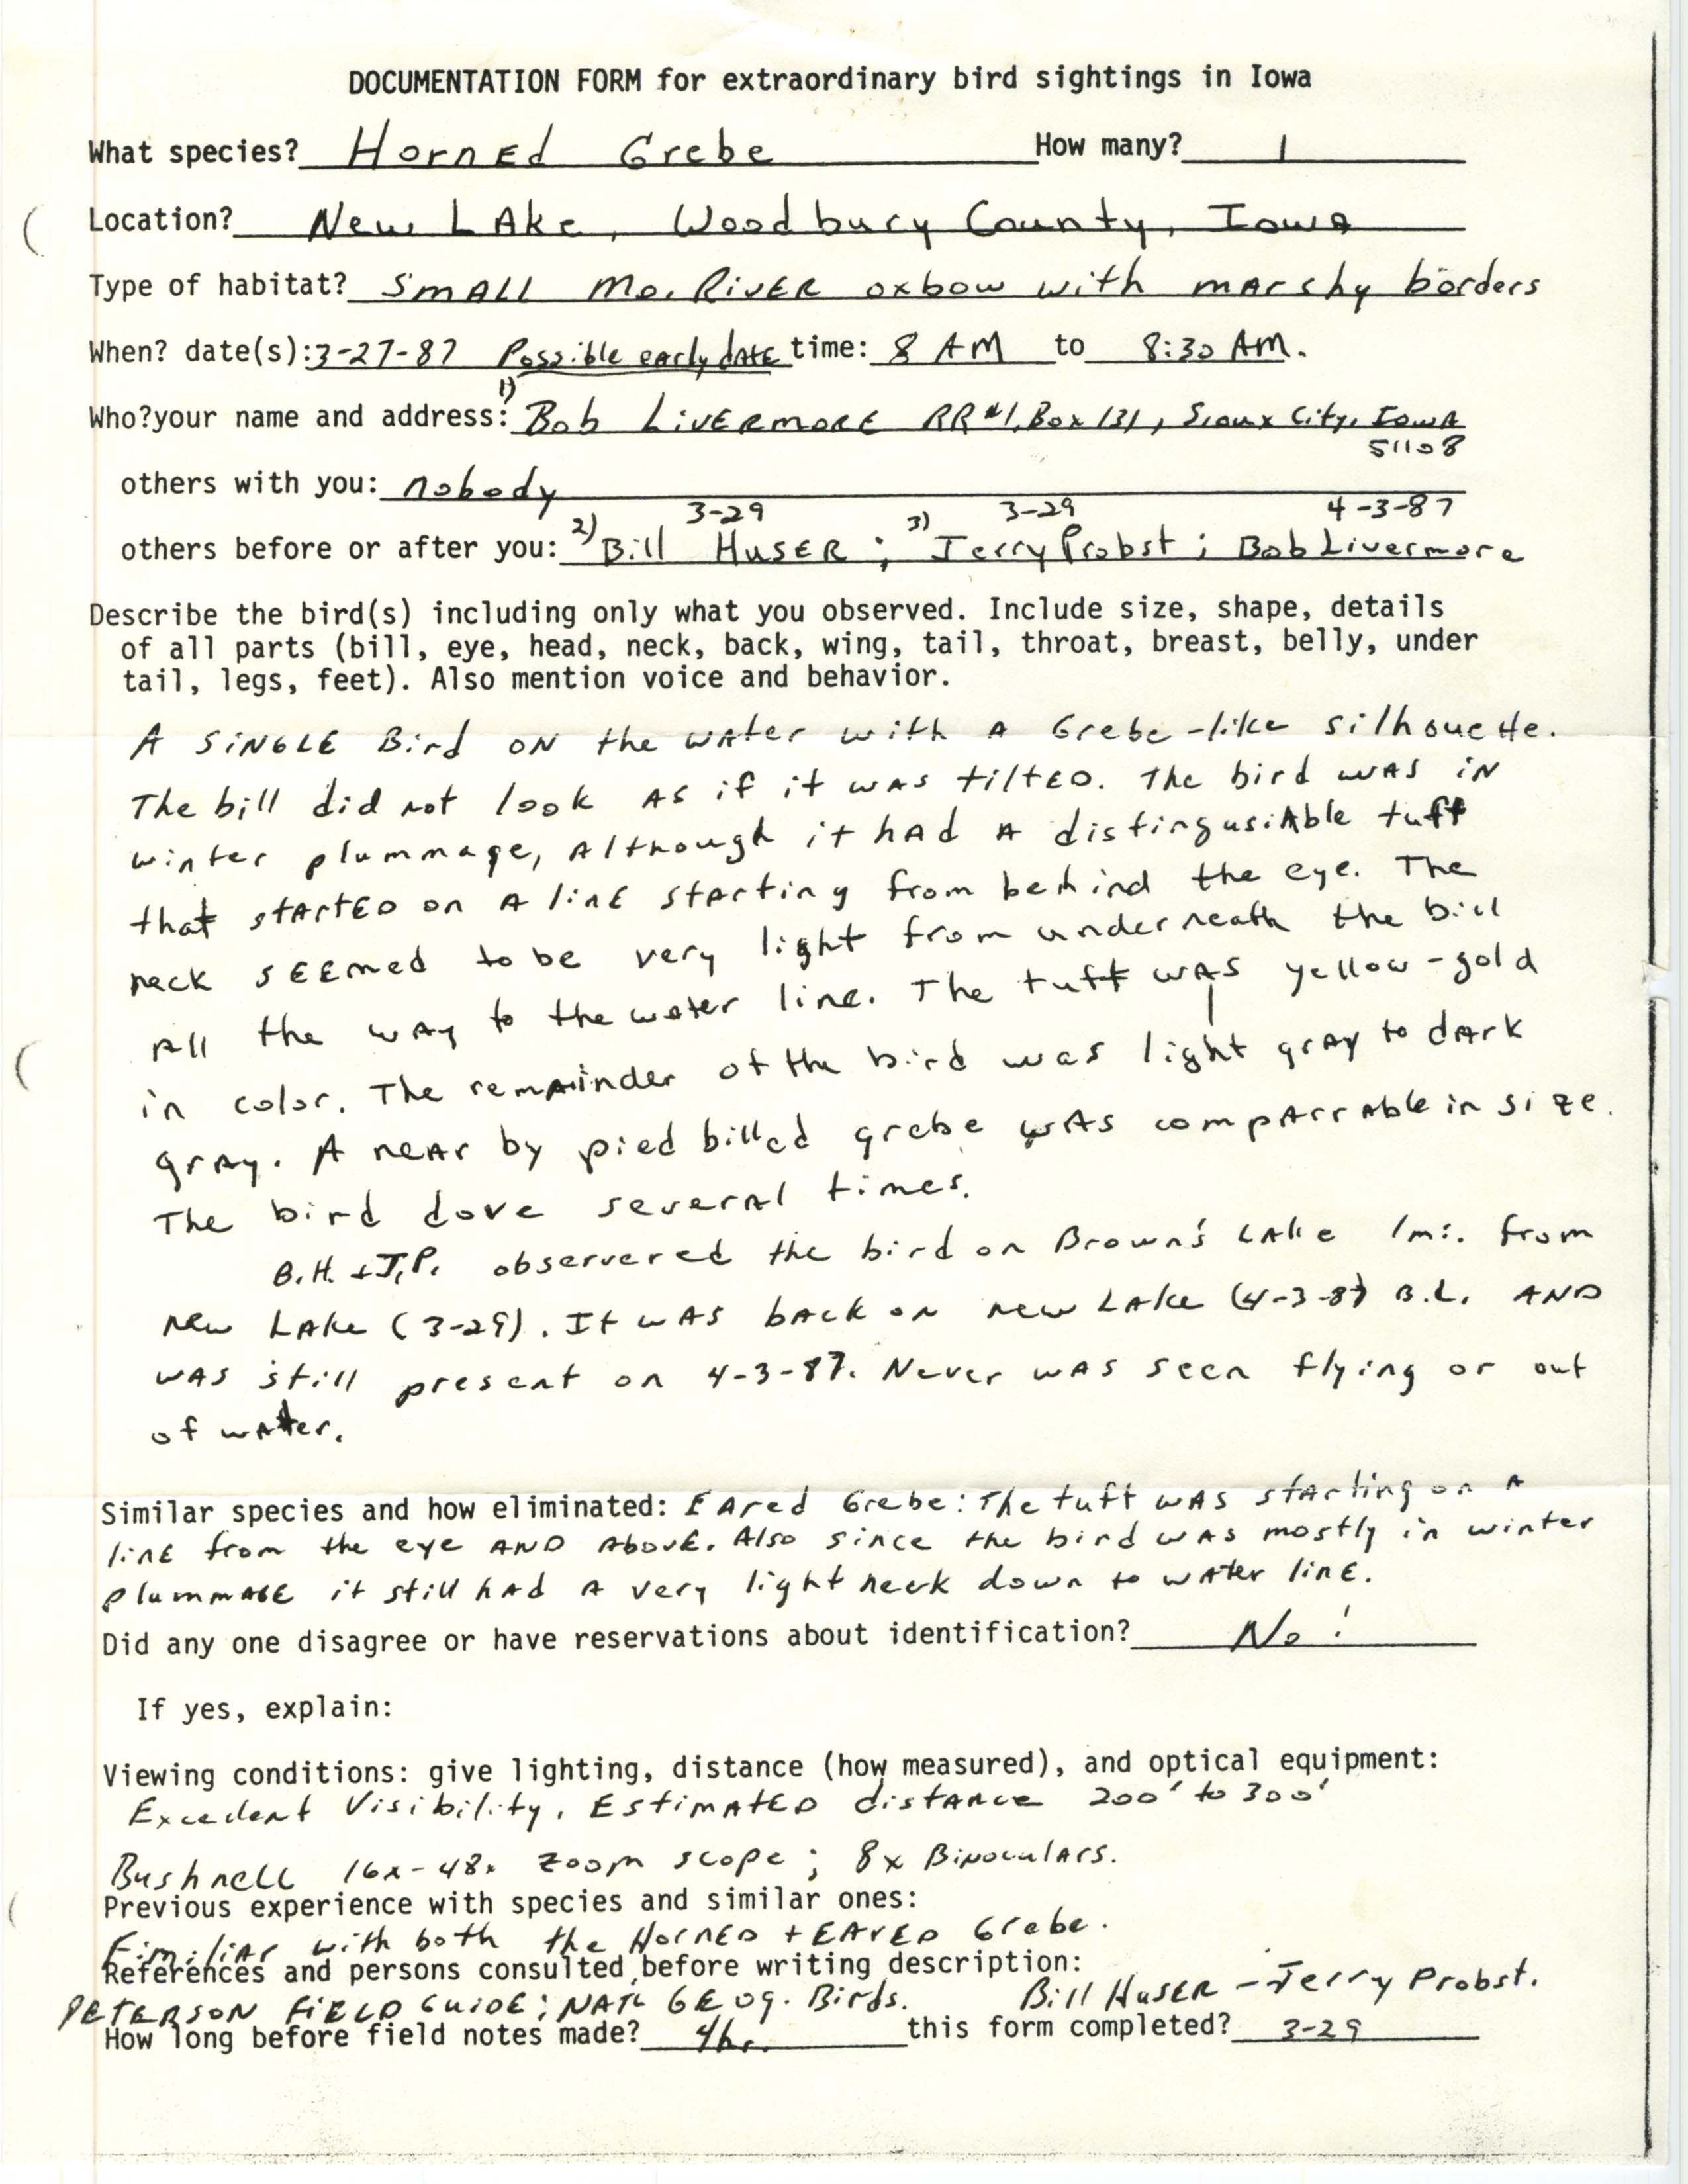 Rare bird documentation form for Horned Grebe at New Lake, 1987